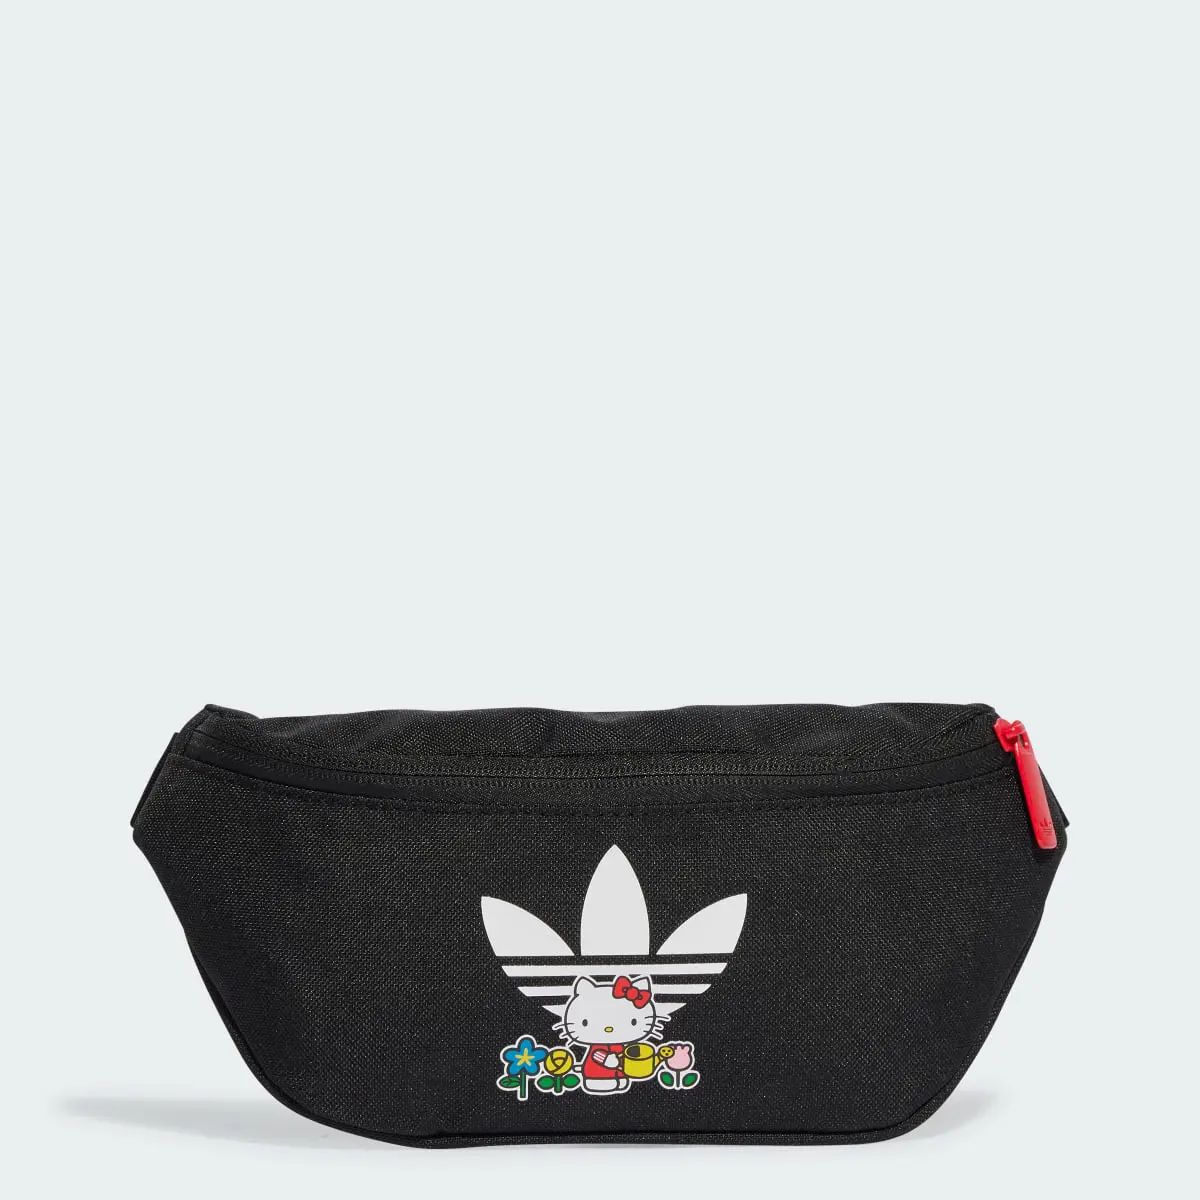 Adidas Originals x Hello Kitty Waist Bag. 1